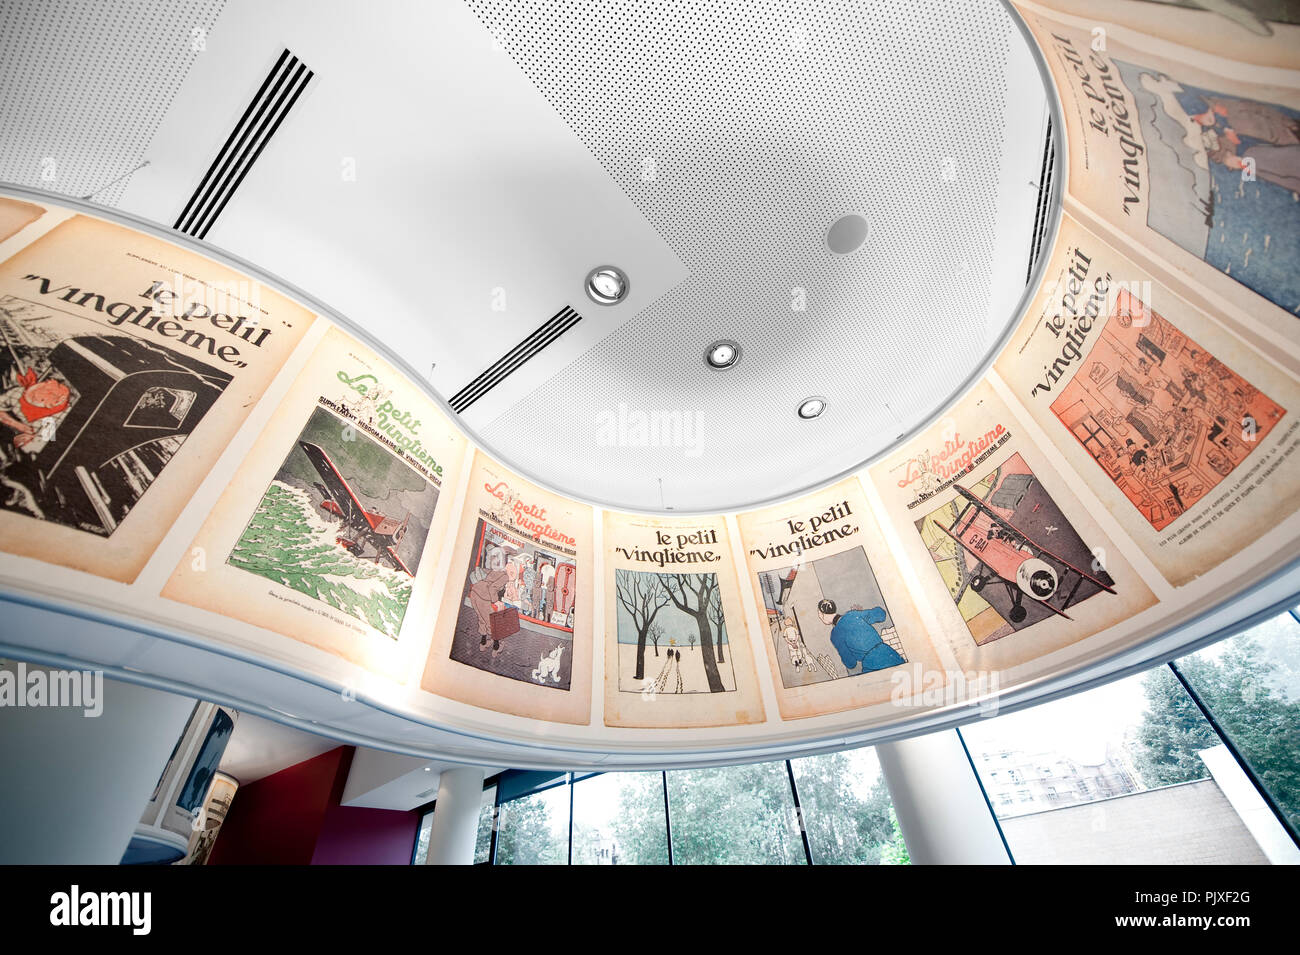 The interior of the Hergé Museum in Louvain-La-Neuve, designed by architect Christian de Portzamparc and scenographer Joost Swarte (Belgium, 20/08/201 Stock Photo